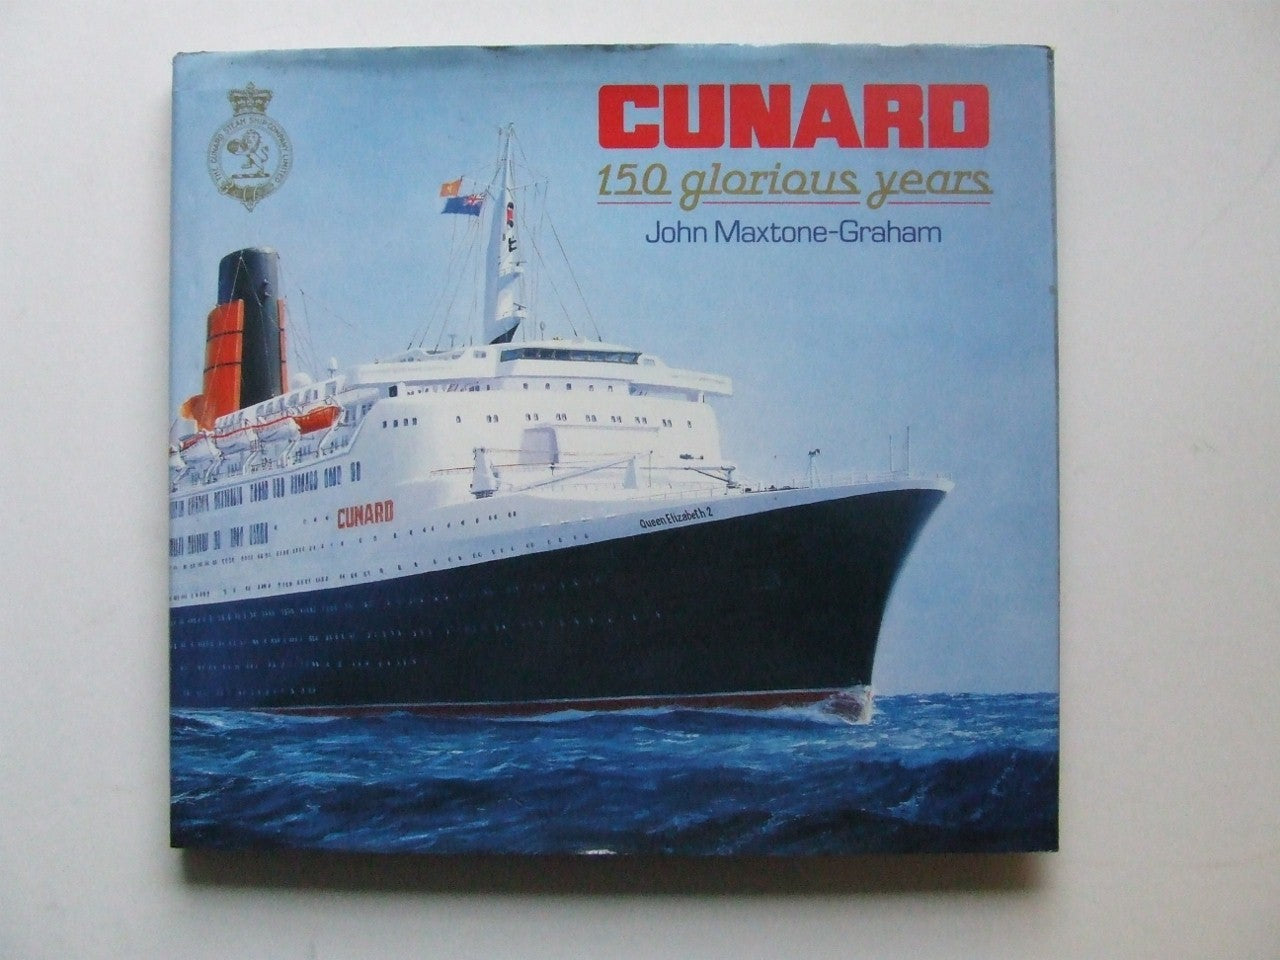 Cunard, 150 glorious years